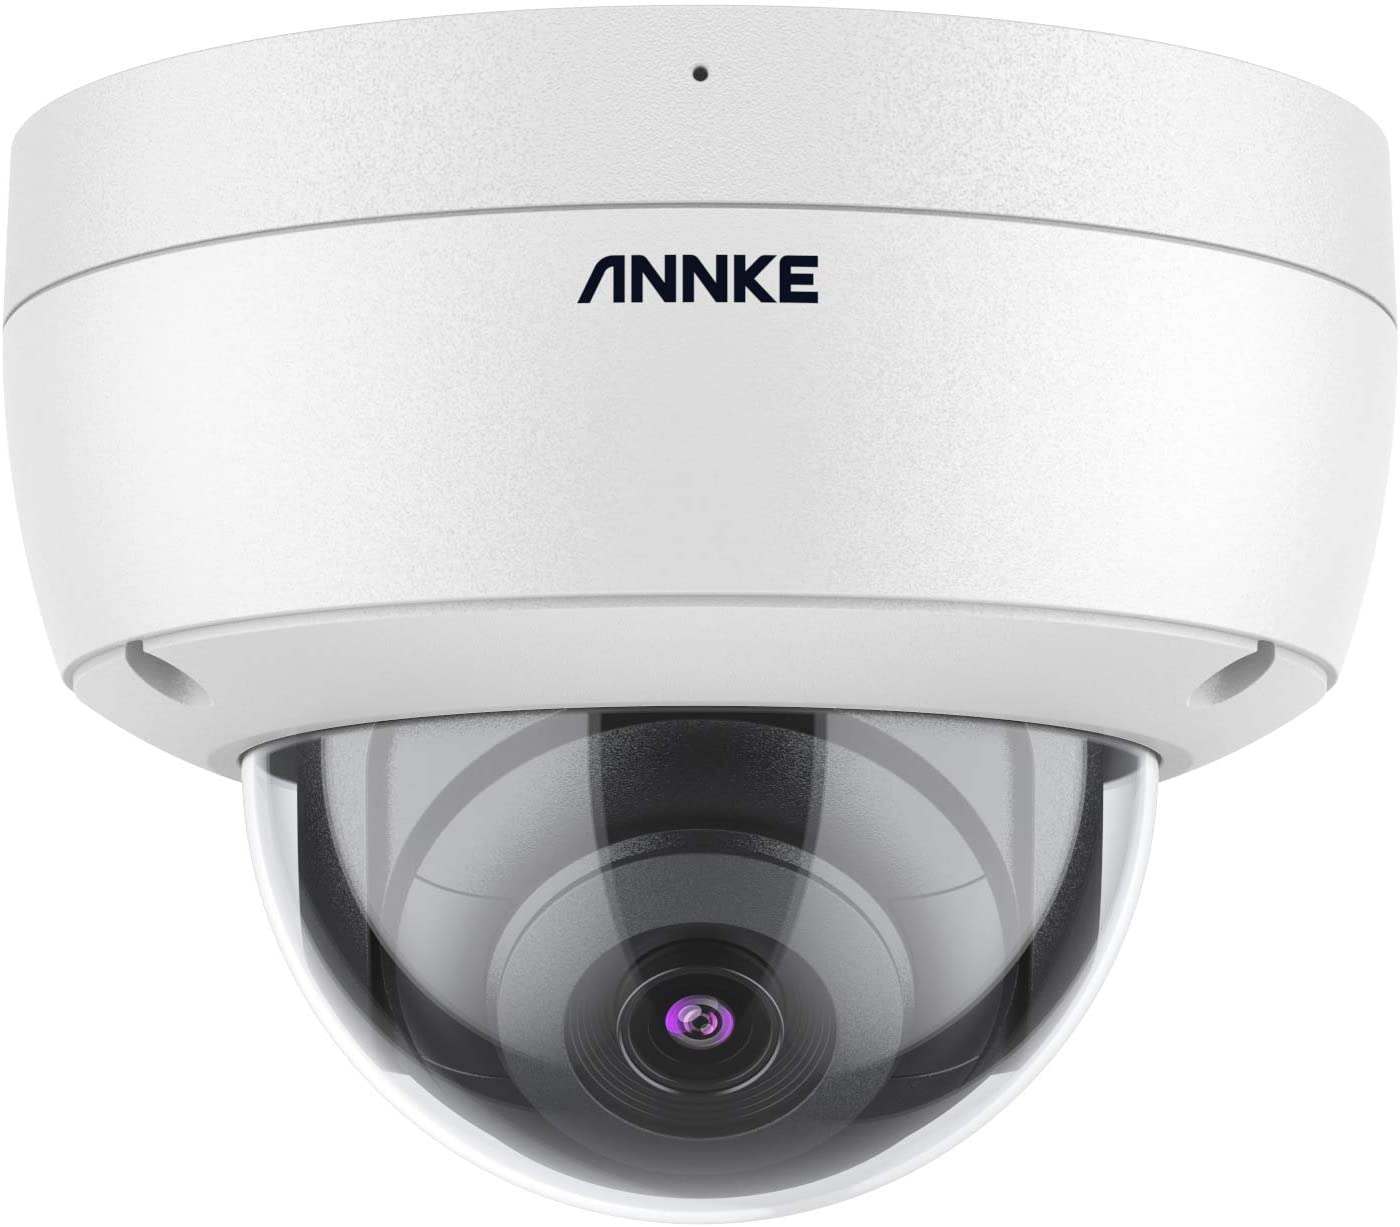 Annke C800 - outdoor IP camera recording video in 4K